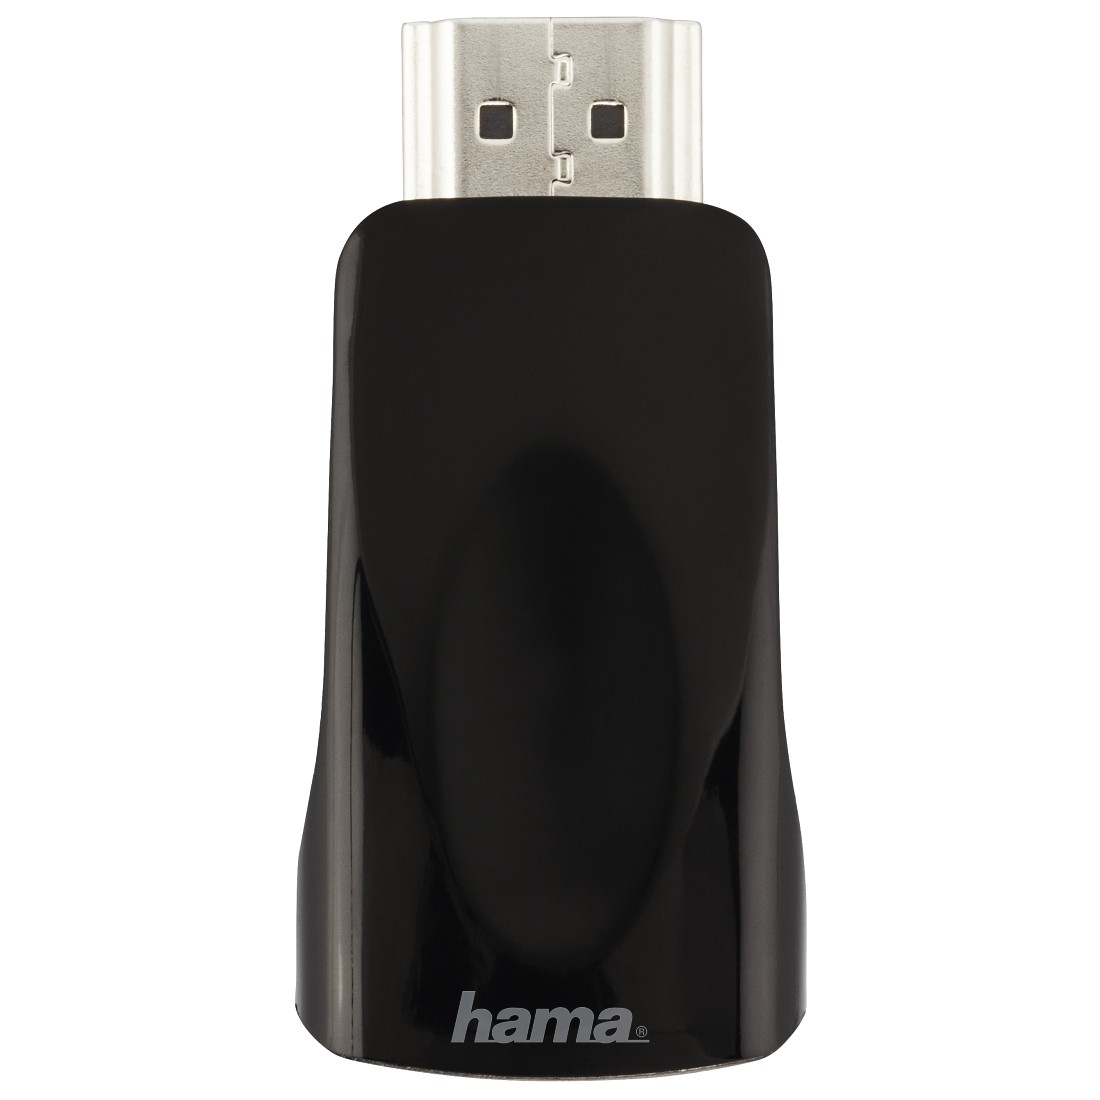 Hama HDMI Converter for VGA